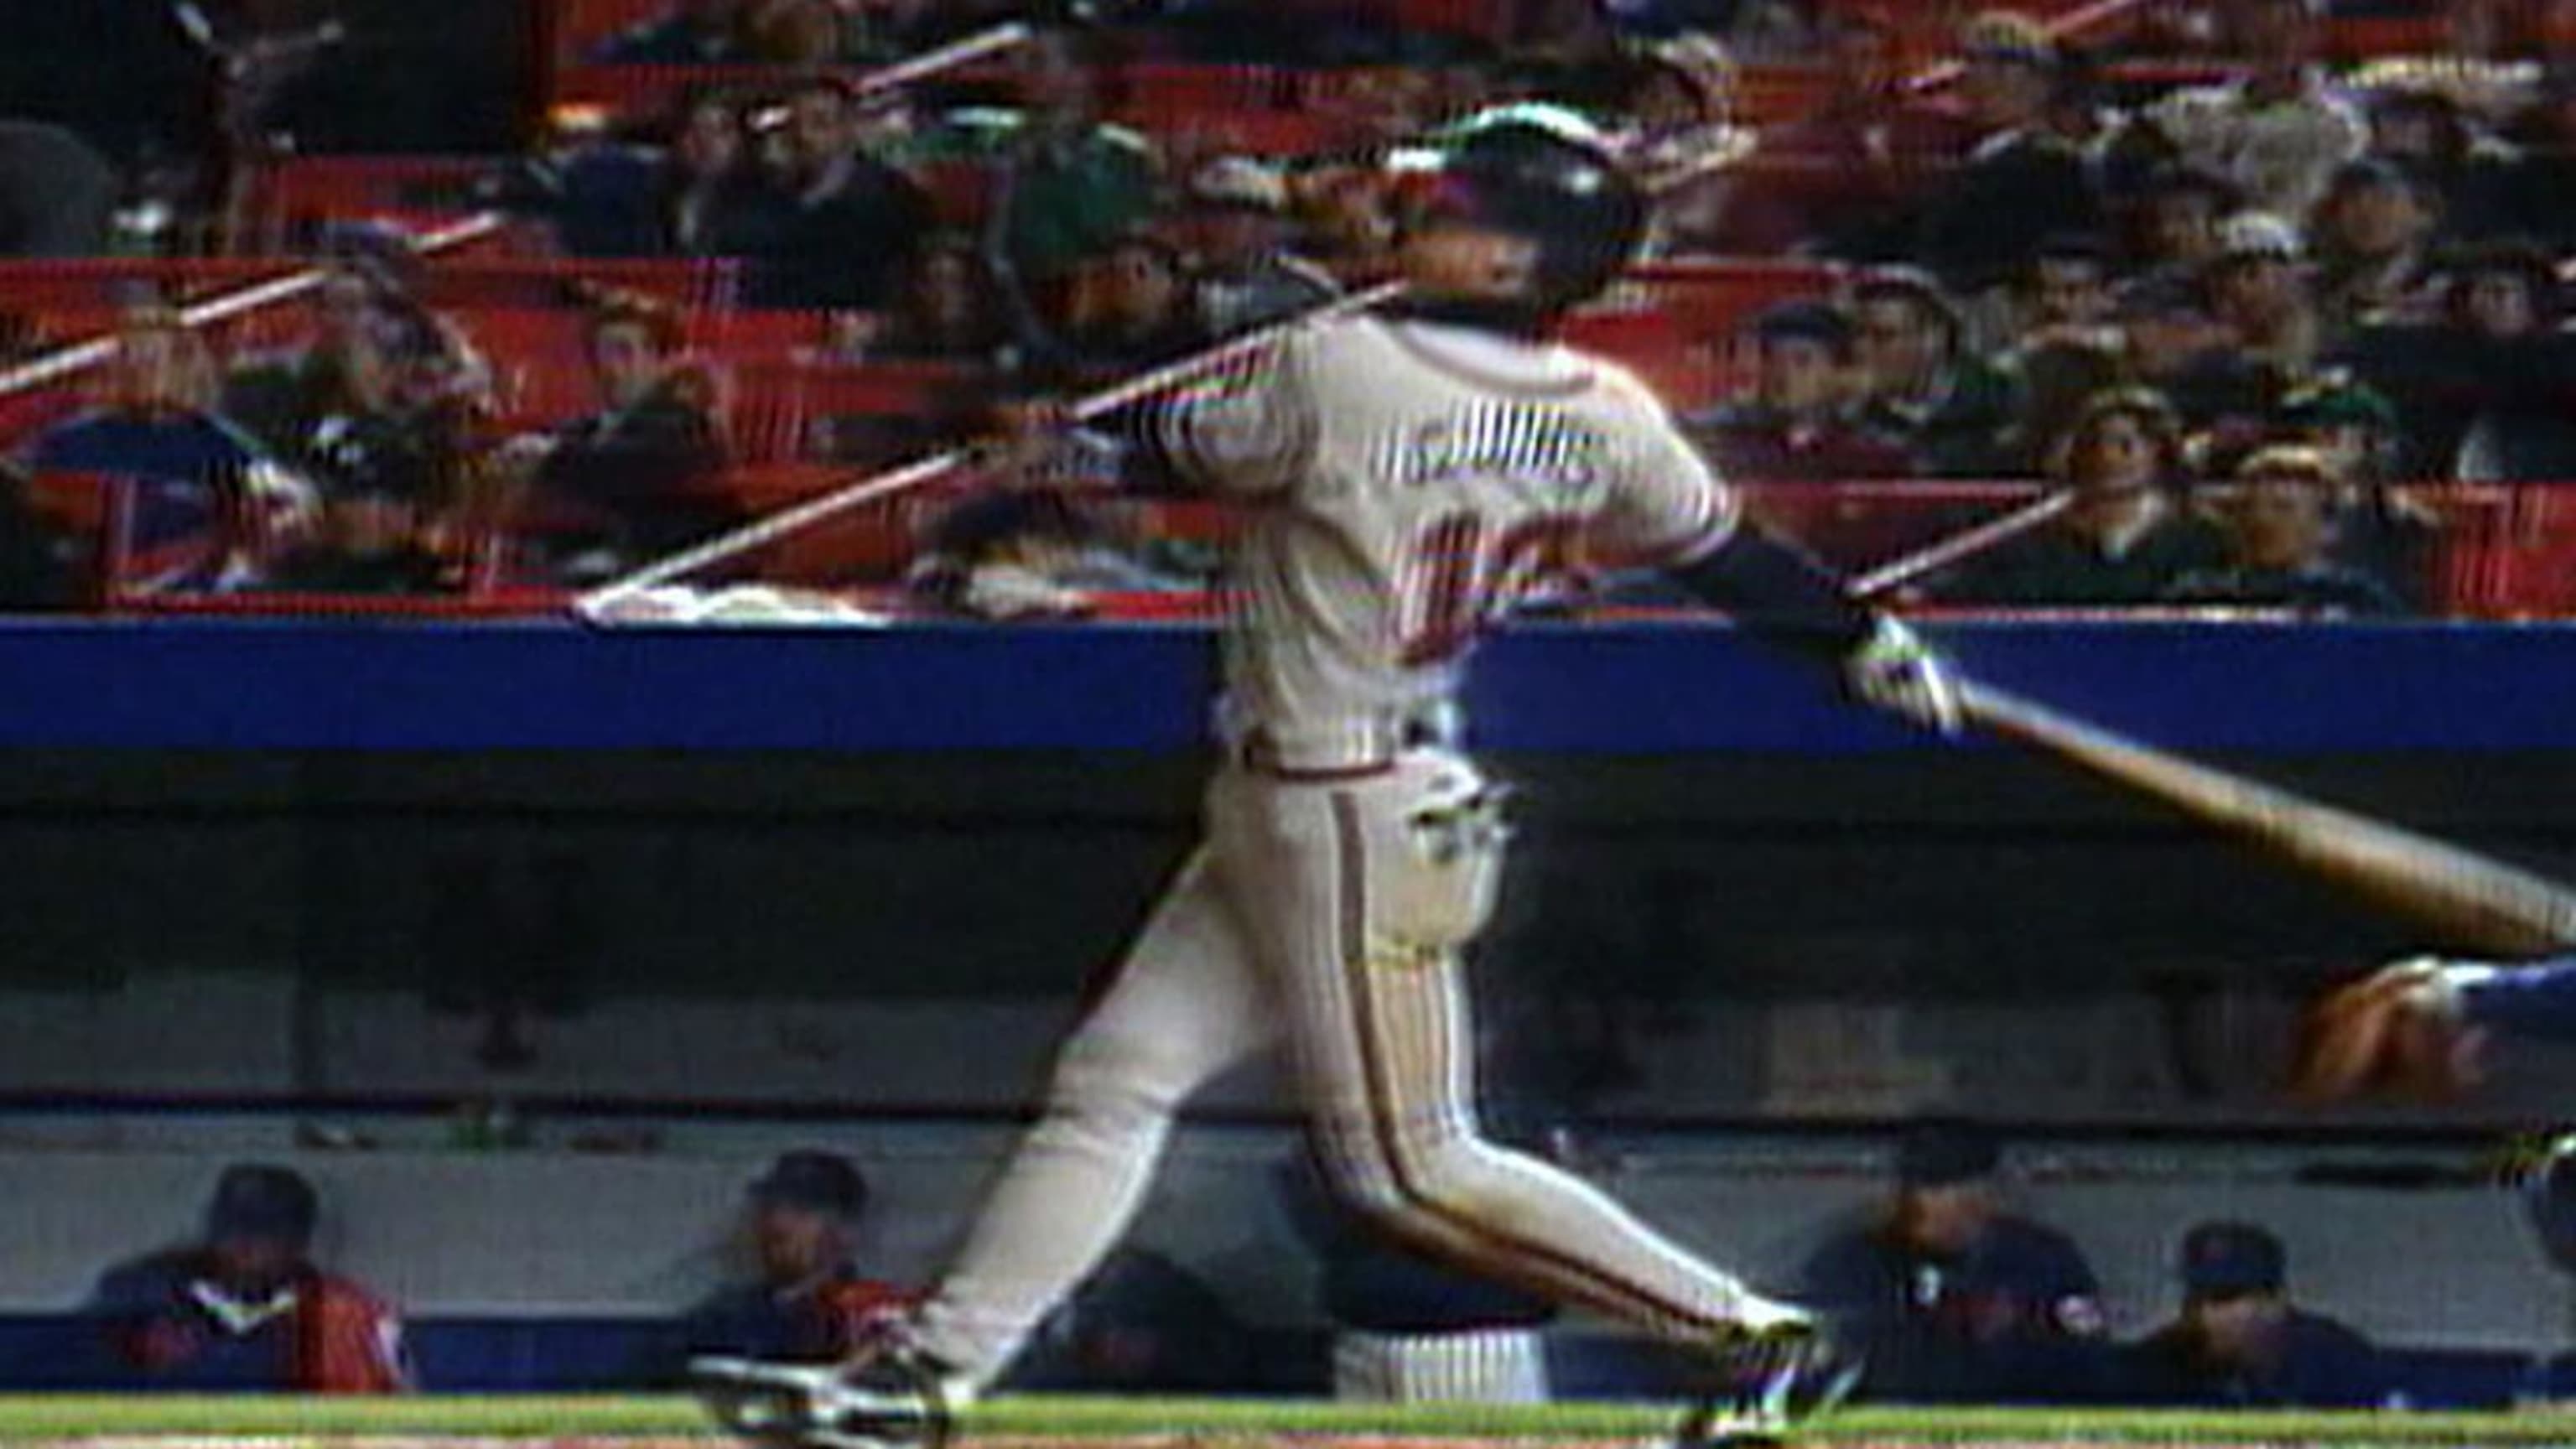 1995 Braves World Series winning season revisited